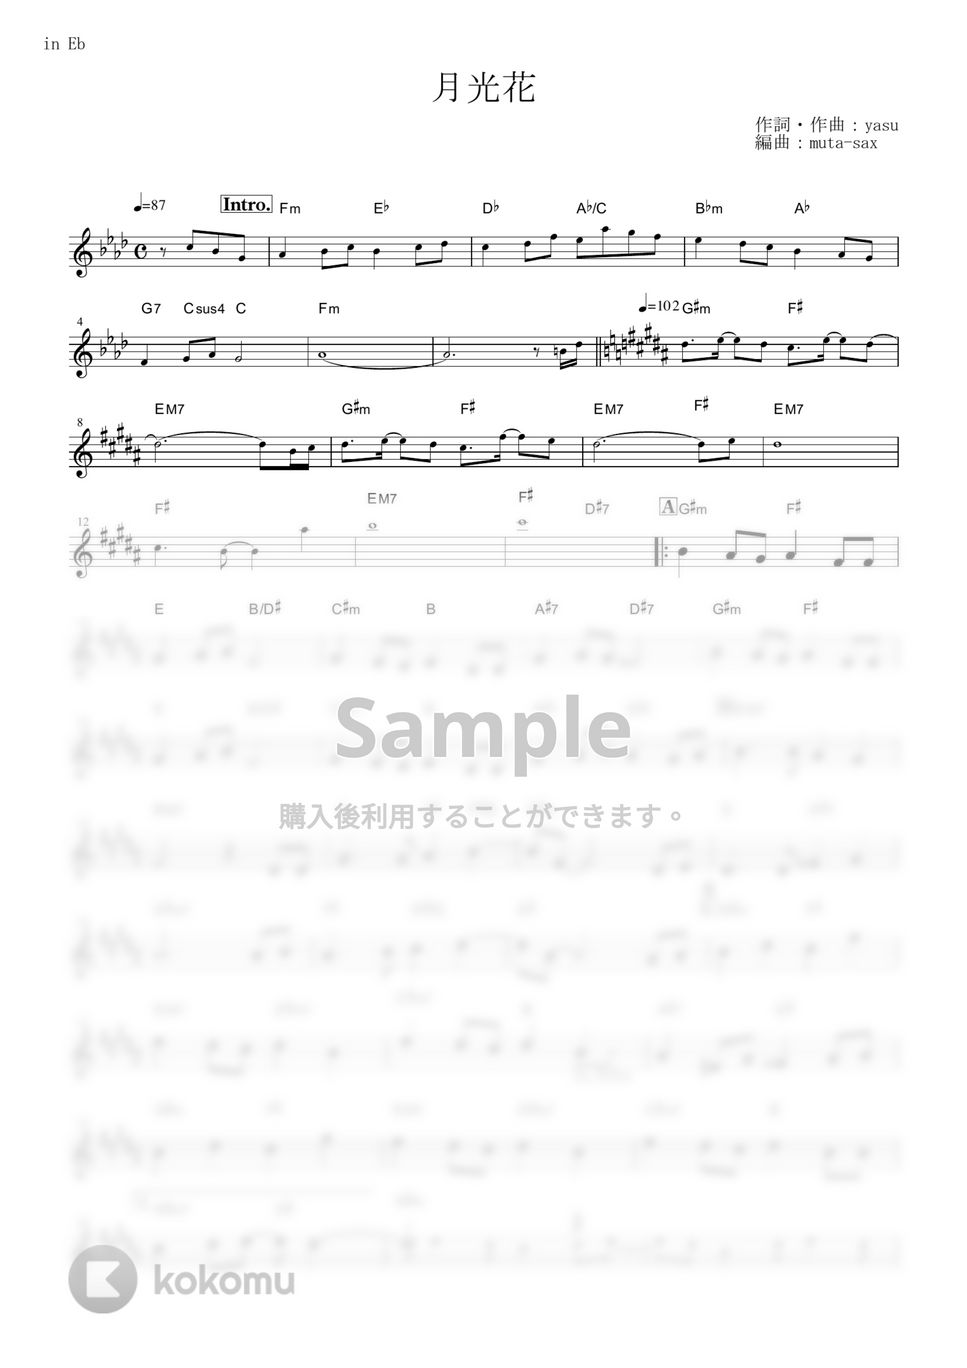 Janne Da Arc - 月光花 (『ブラック・ジャック』 / in Eb) by muta-sax